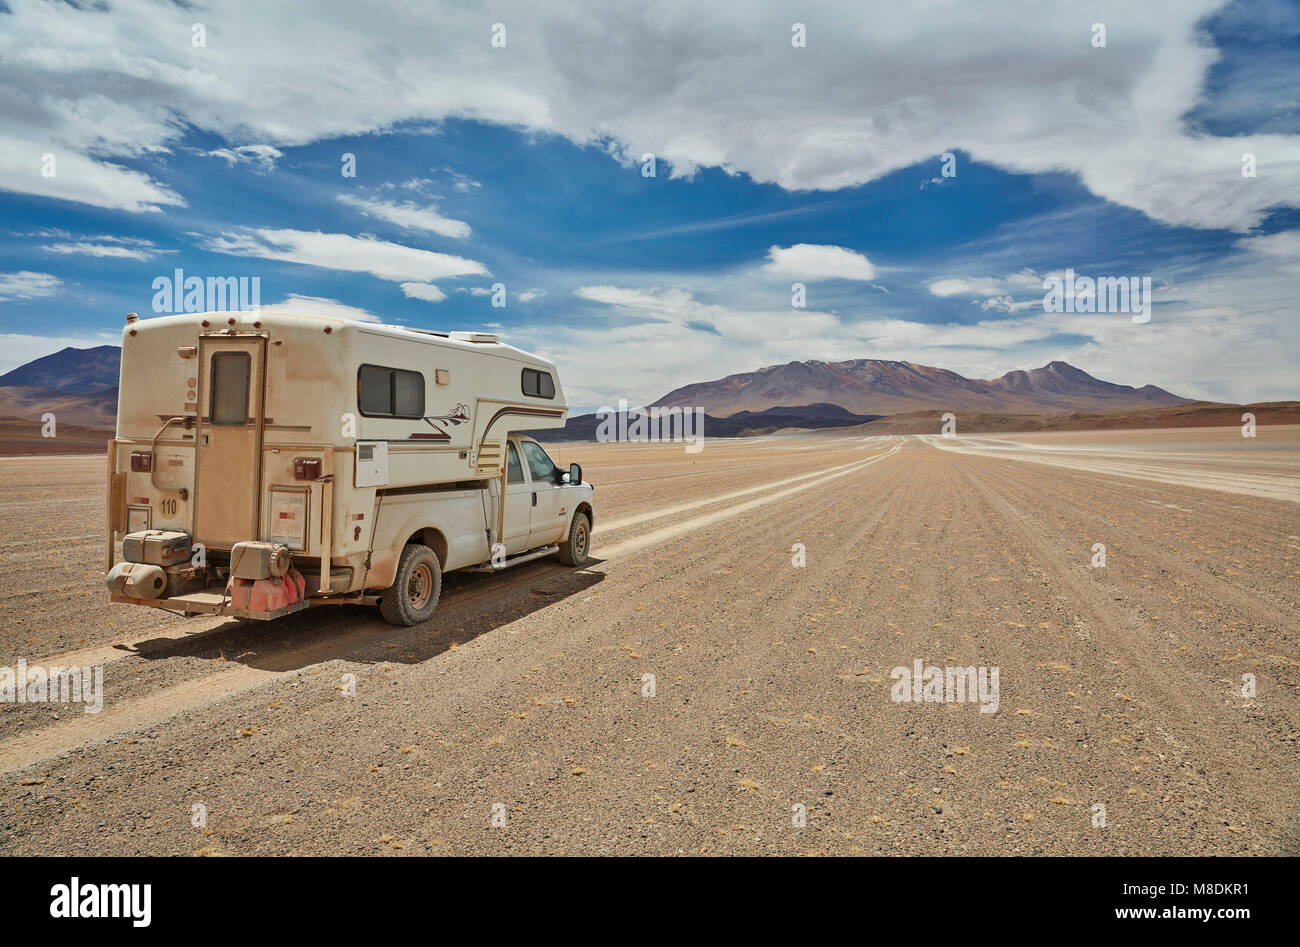 Recreational vehicle, travelling across landscape, rear view, Villa Alota, Potosi, Bolivia, South America Stock Photo